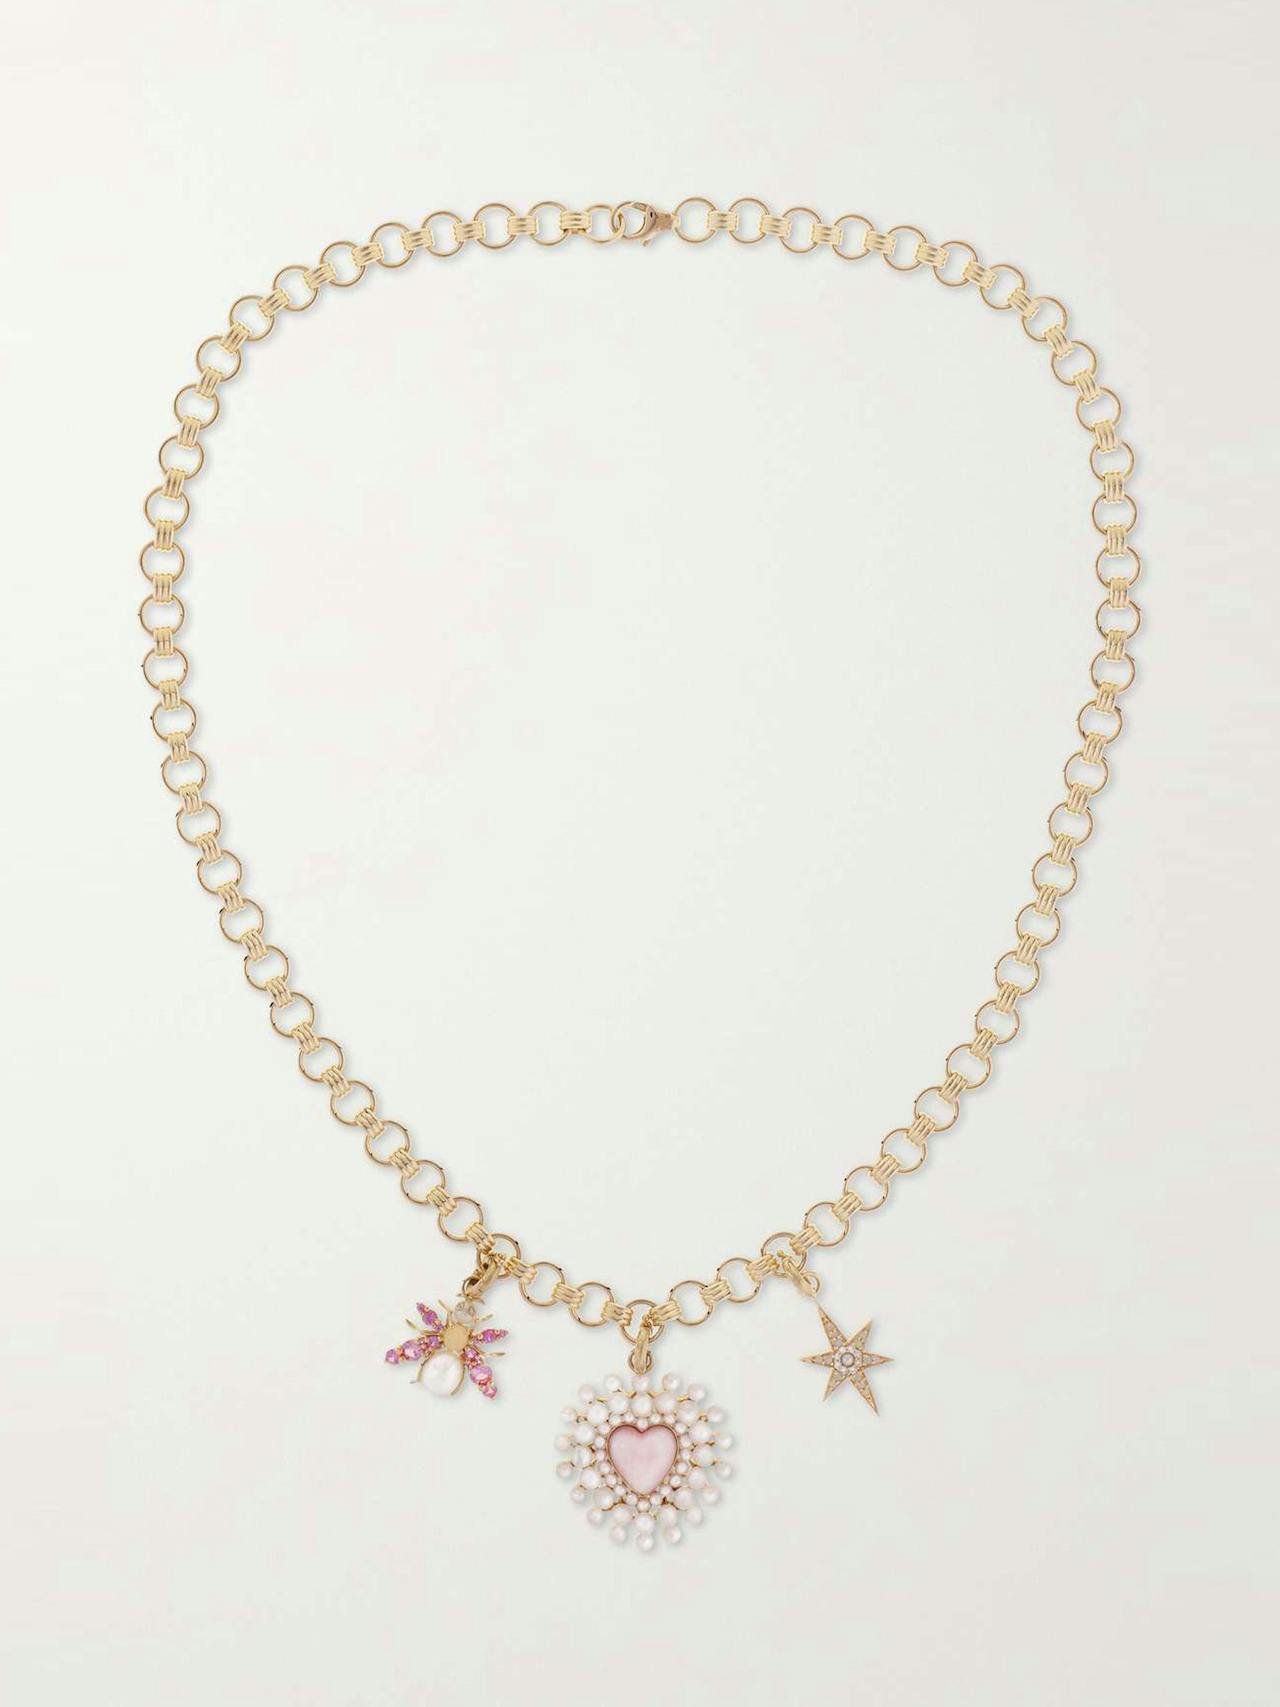 14-karat gold, enamel and multi-stone necklace